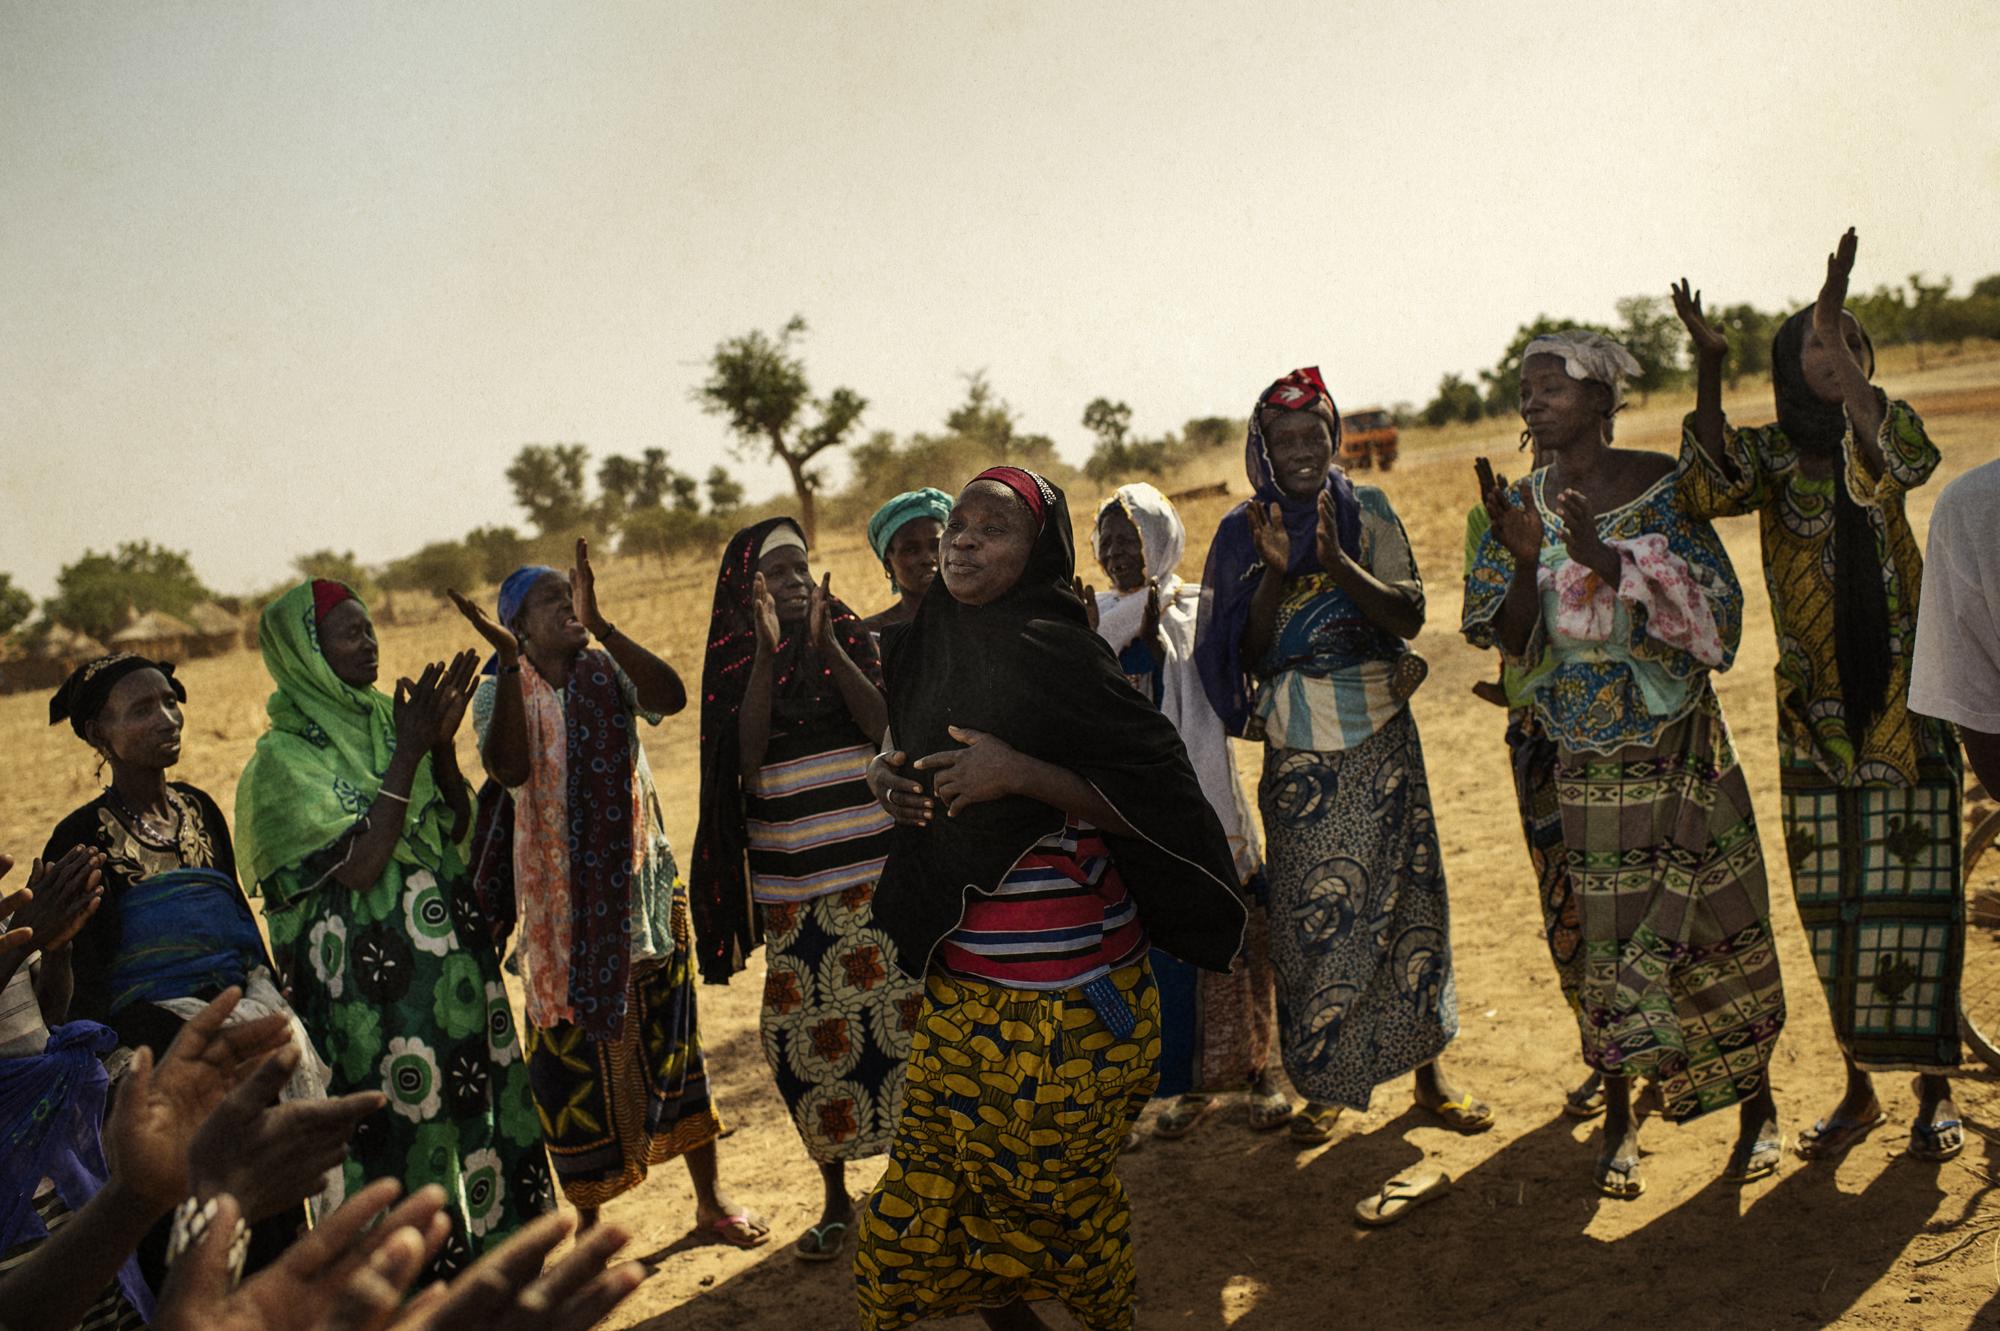 Microcredit / Burkina Faso - Burkina Faso, Moyaorgo.
November 2011.
A group of women...